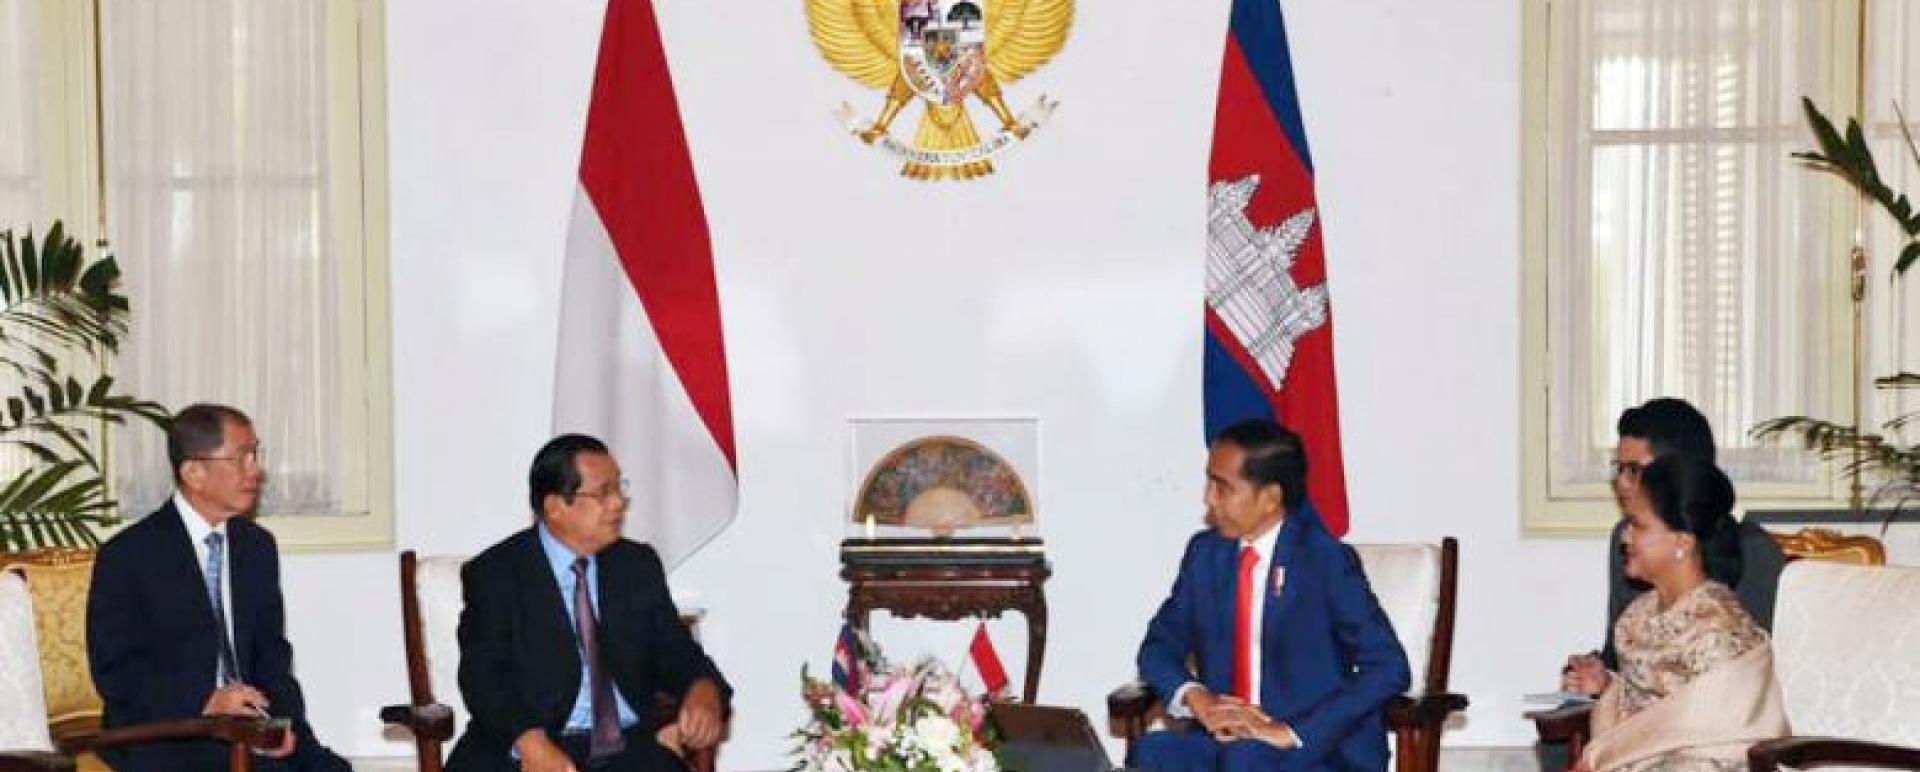 Prime Minister Hun Sen meets with Indonesian president Joko “Jokowi” Widodo on Sunday. Hun Sen's Facebook page